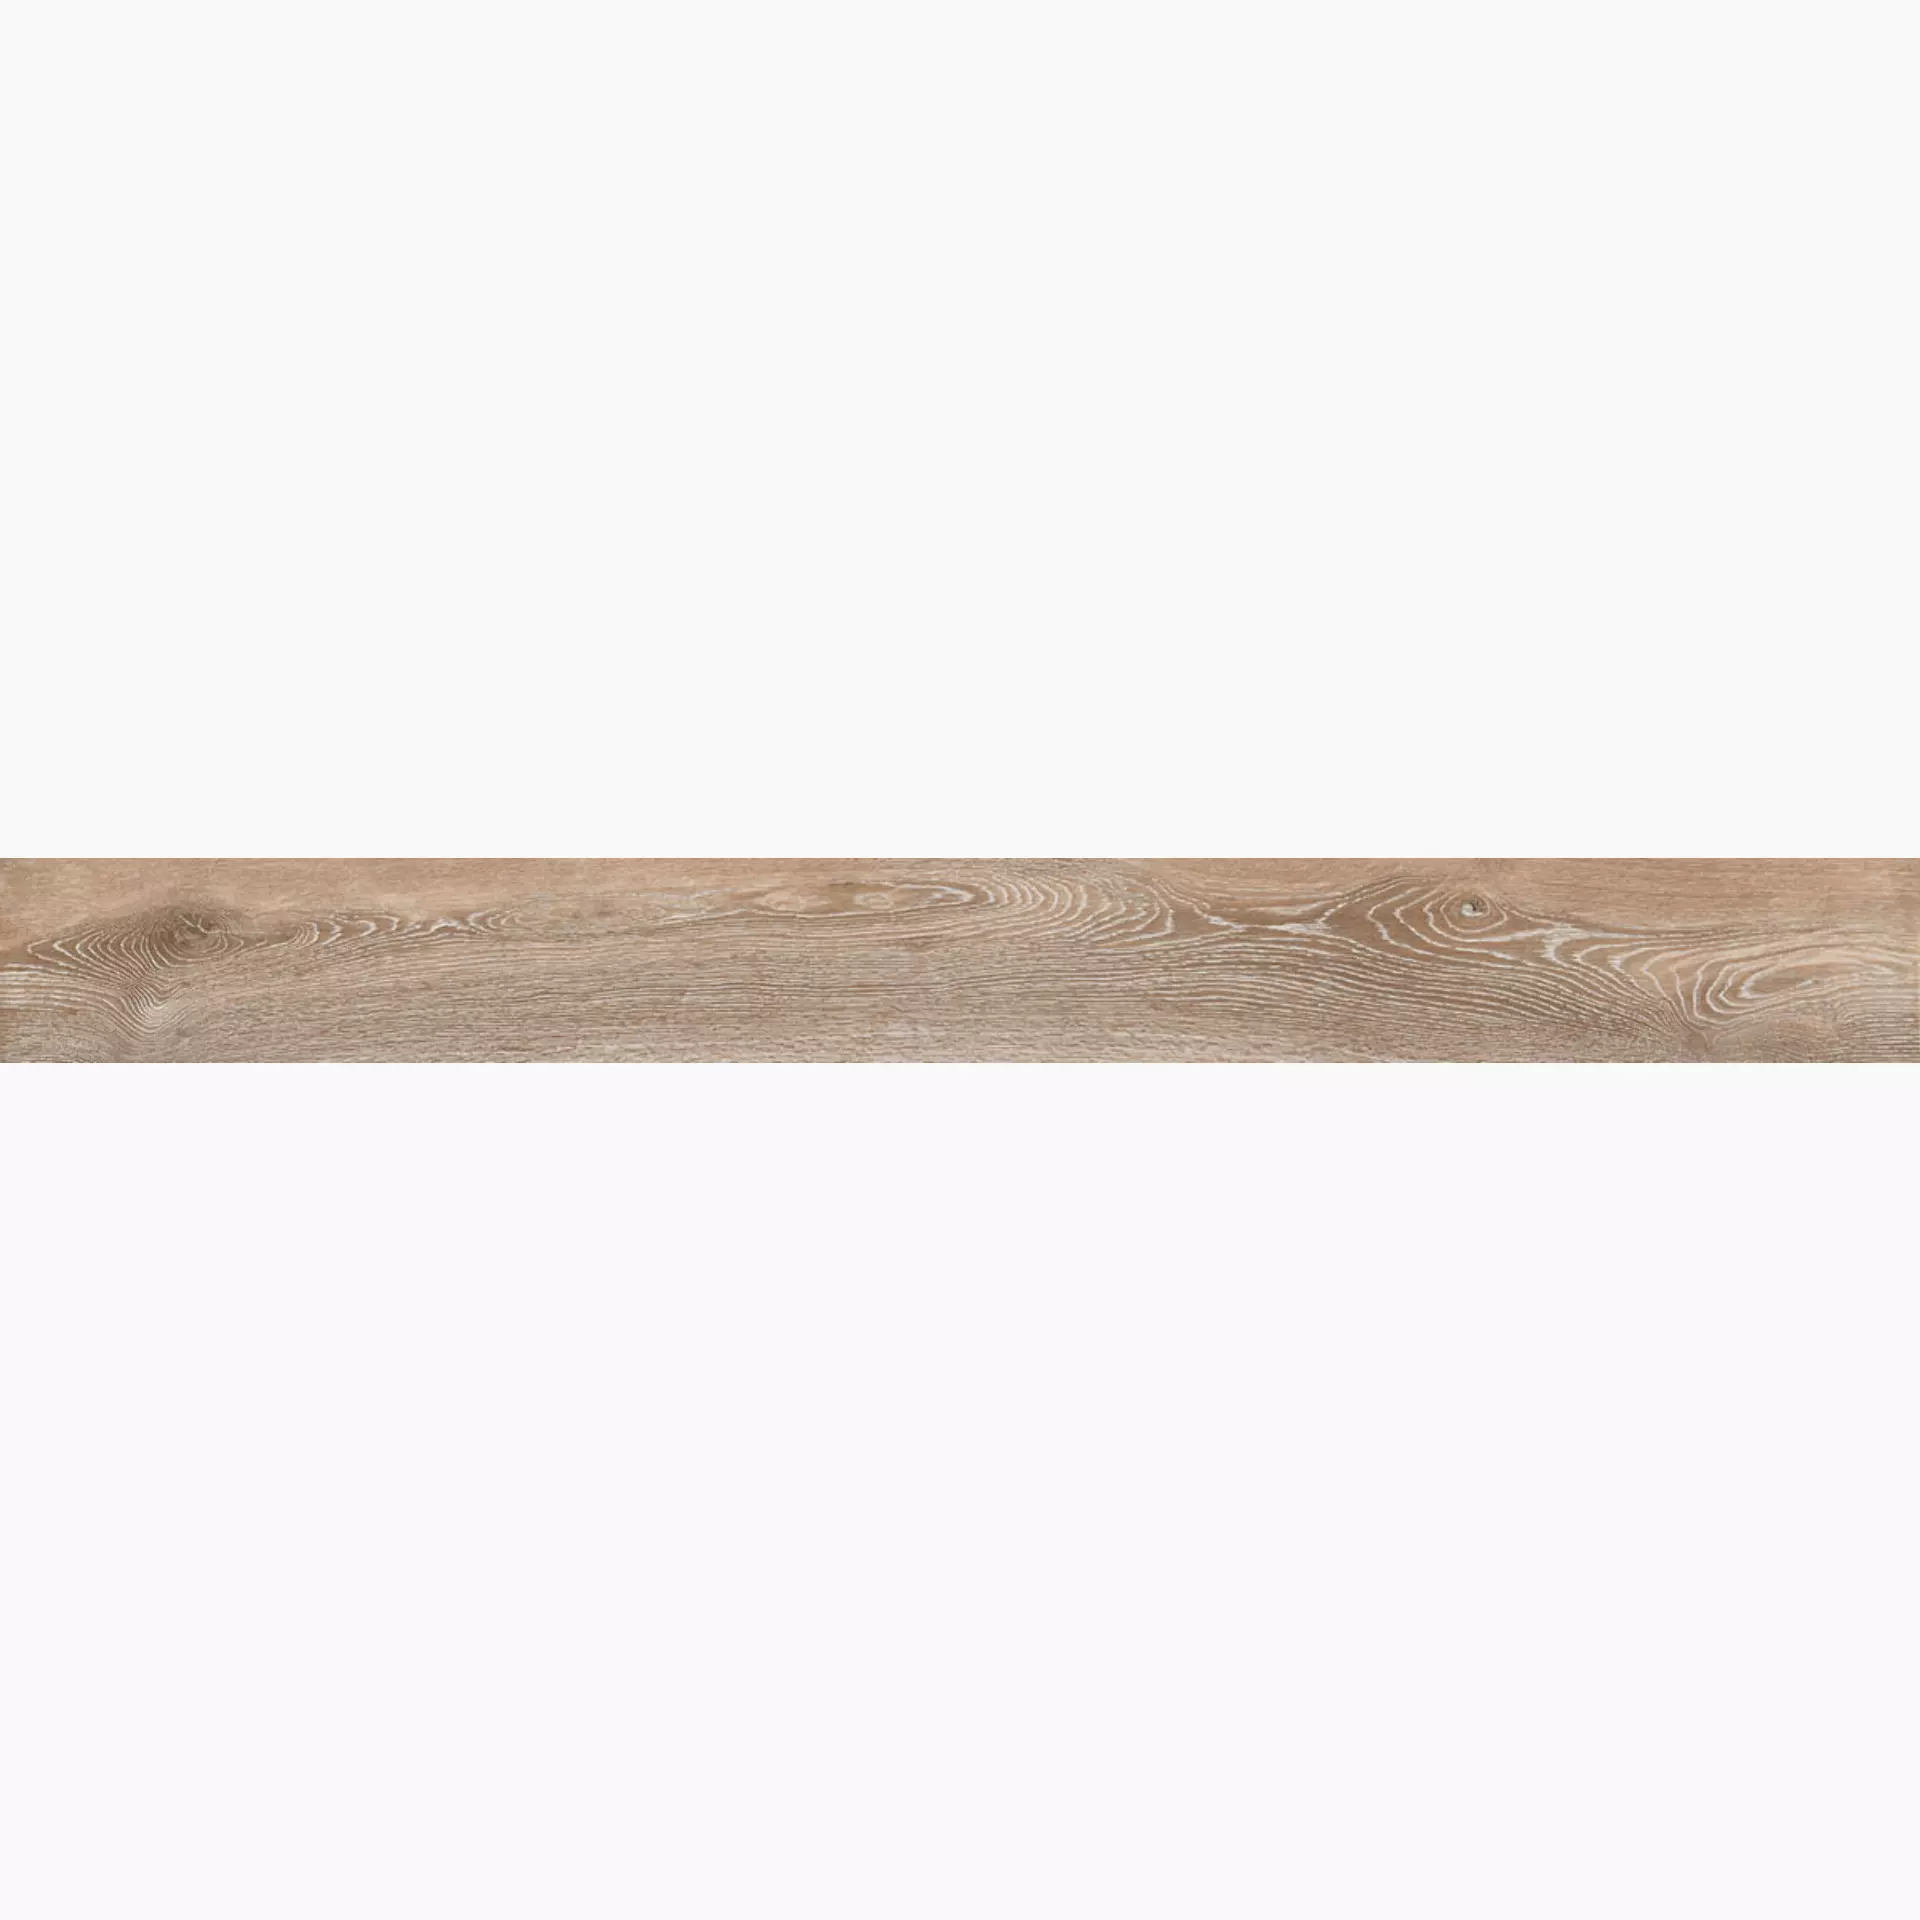 La Faenza Legno Dark Beige Natural Slate Cut Matt 170462 20x180cm rectified 10mm - LEGNO 2018BS RM